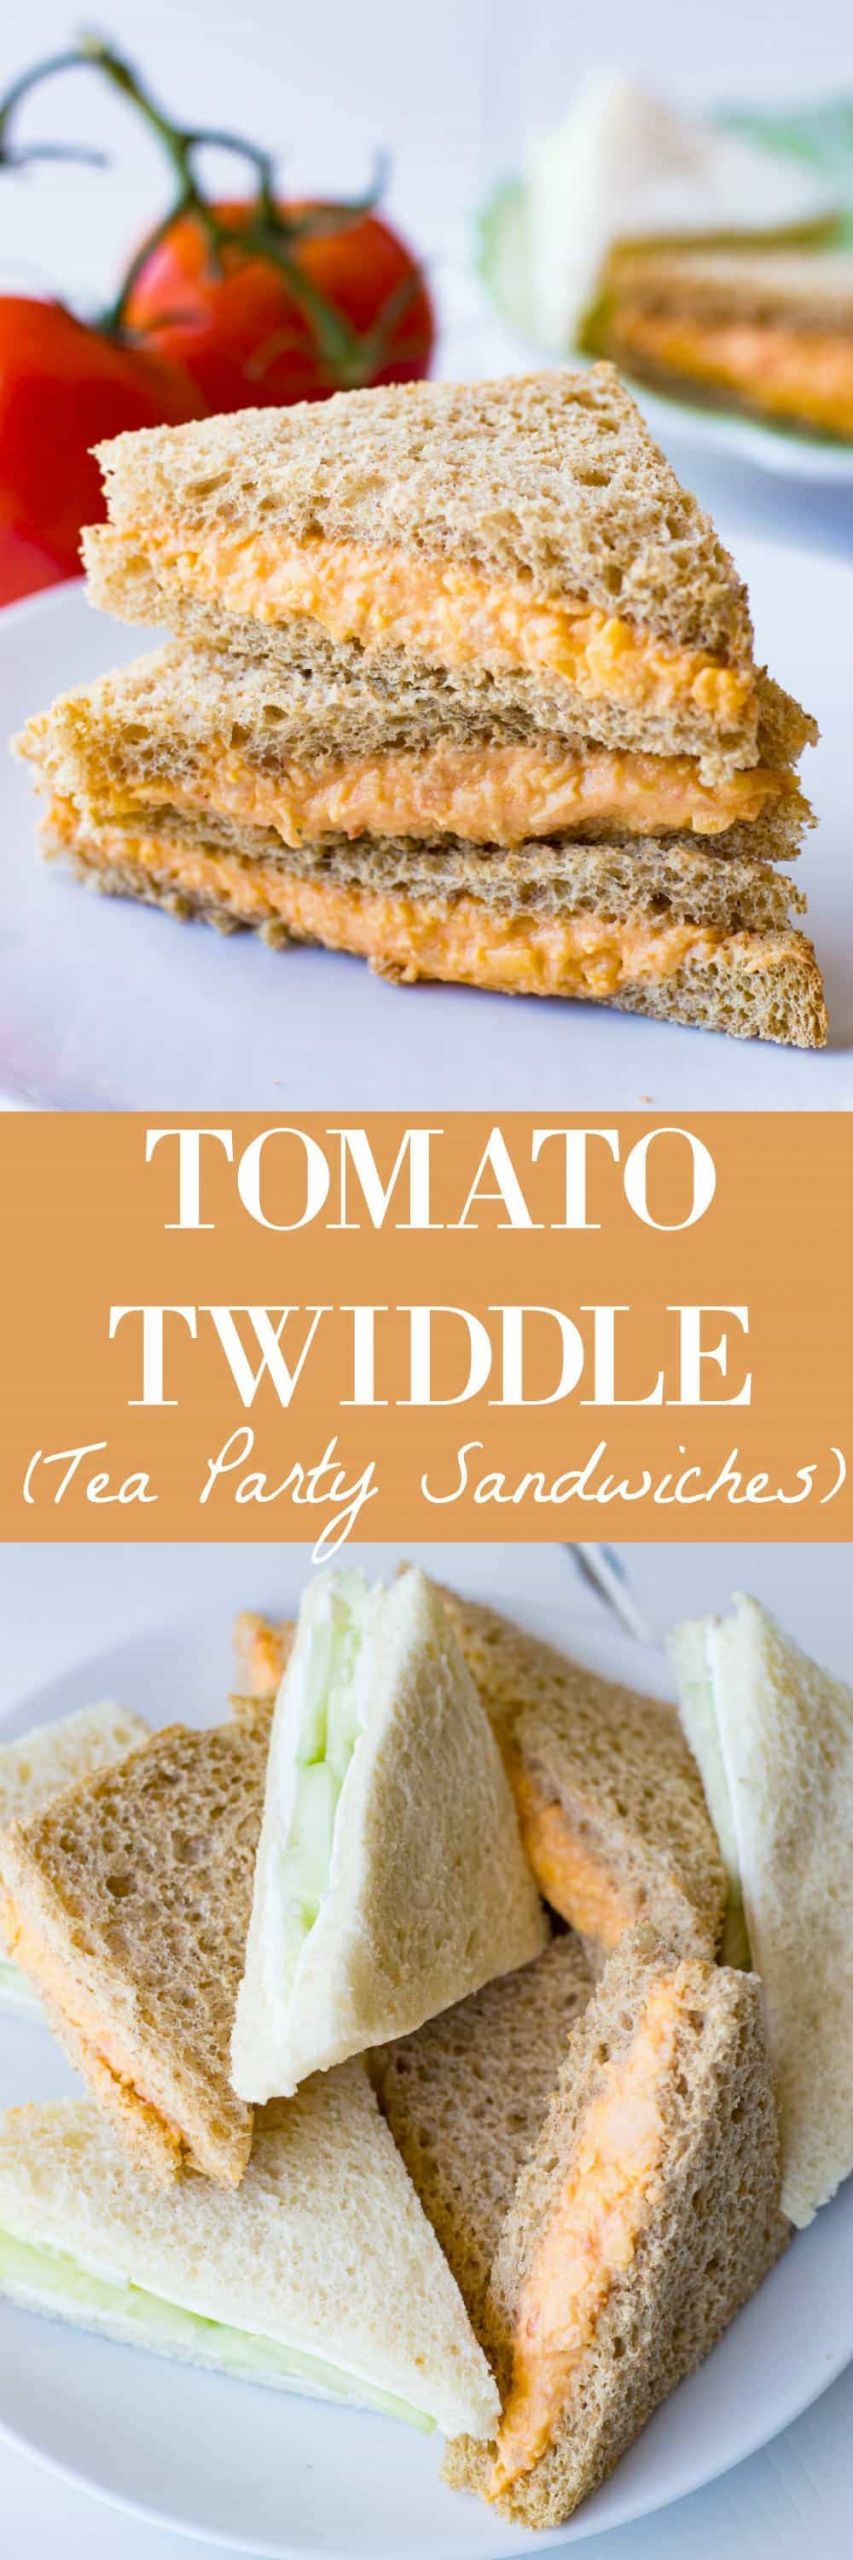 Tea Party Sandwiches Ideas
 Tomato Twiddle The ULTIMATE Tomato Sandwich